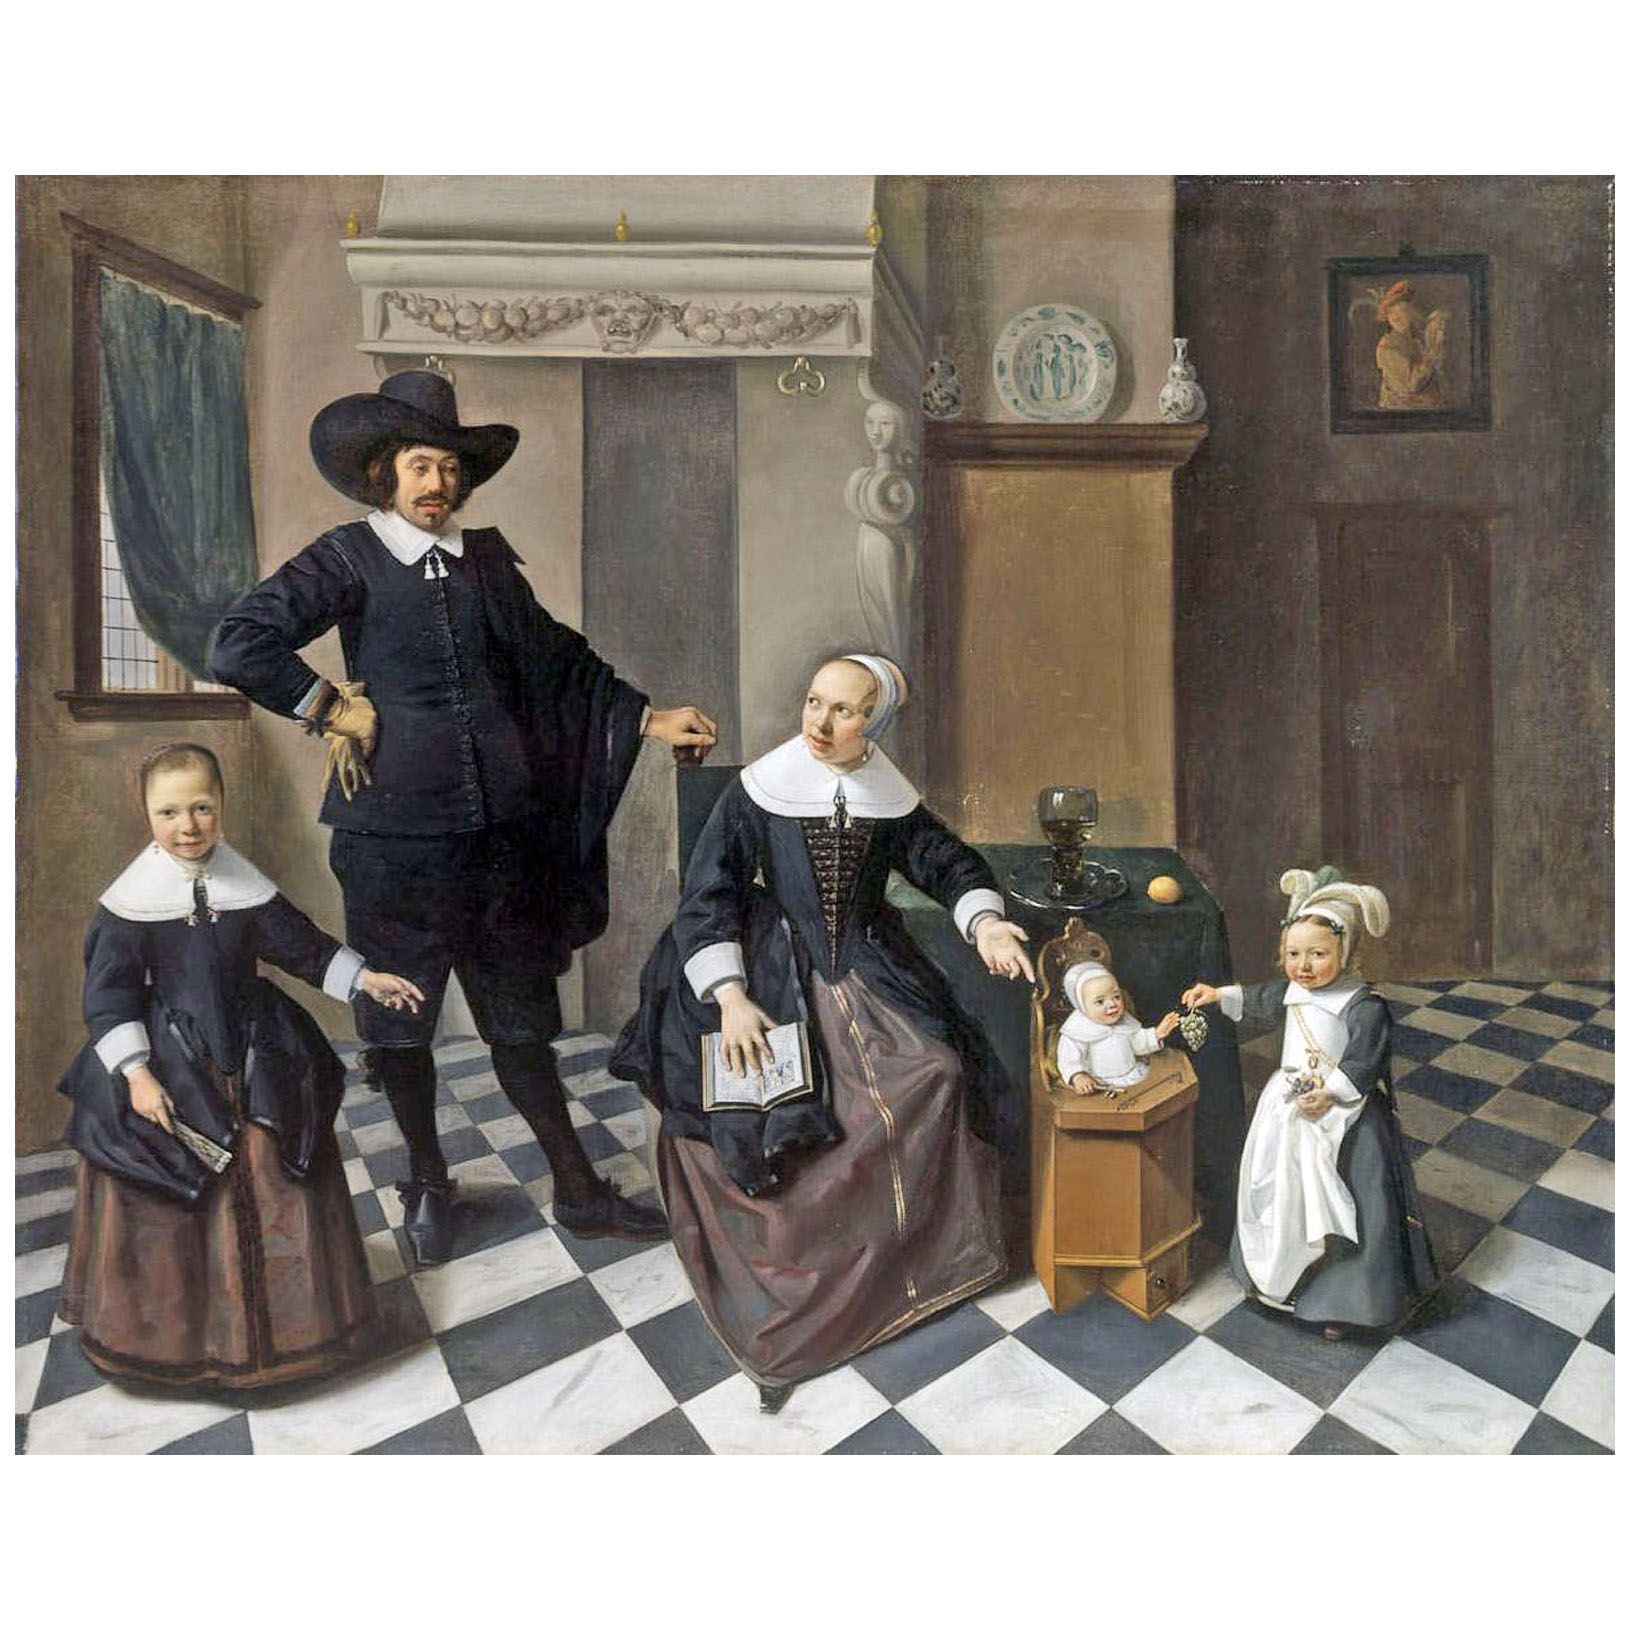 Pieter de Hooch. Portrait of the Family. 1655-1658. Museum of Fine Arts, Budapest